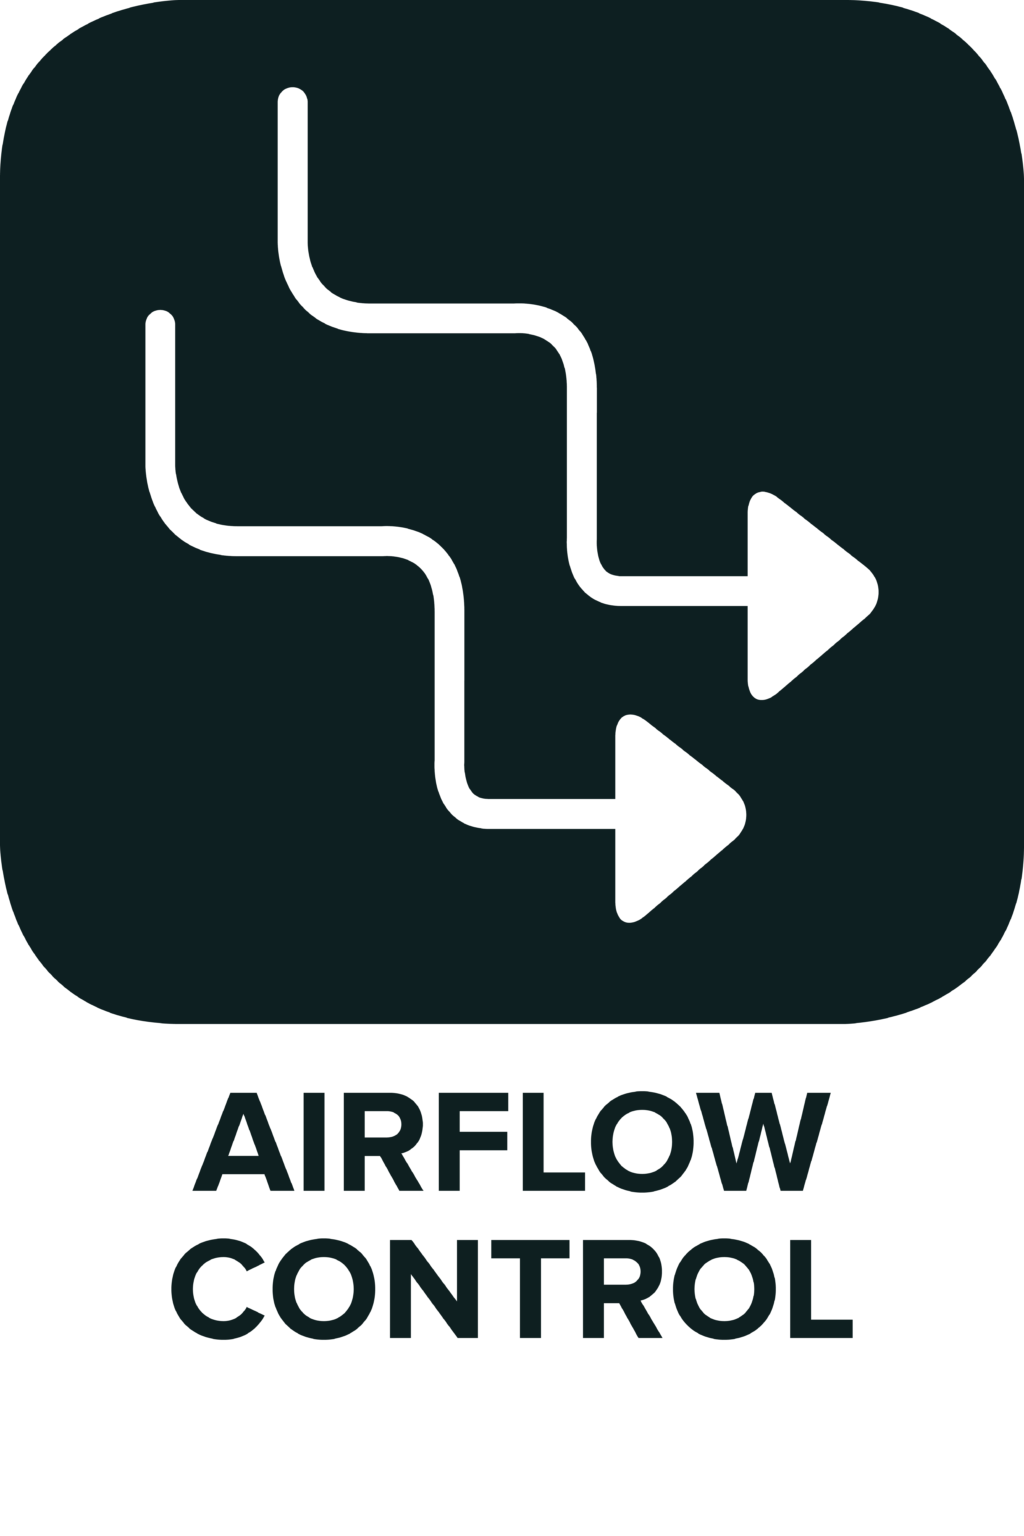 Airflow control